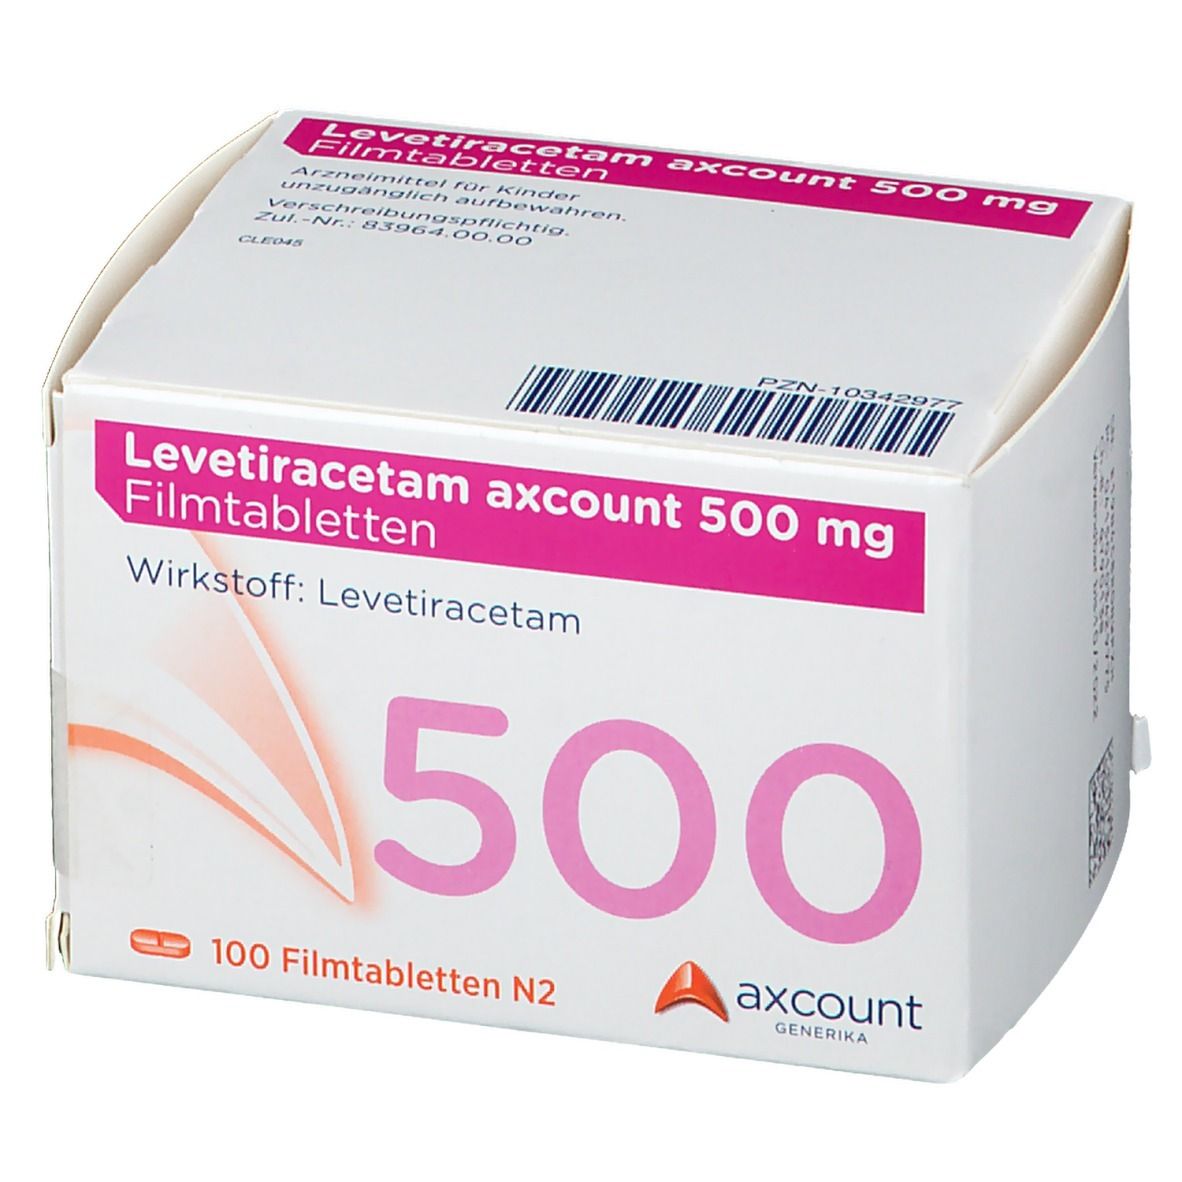 Levetiracetam axcount 500 mg